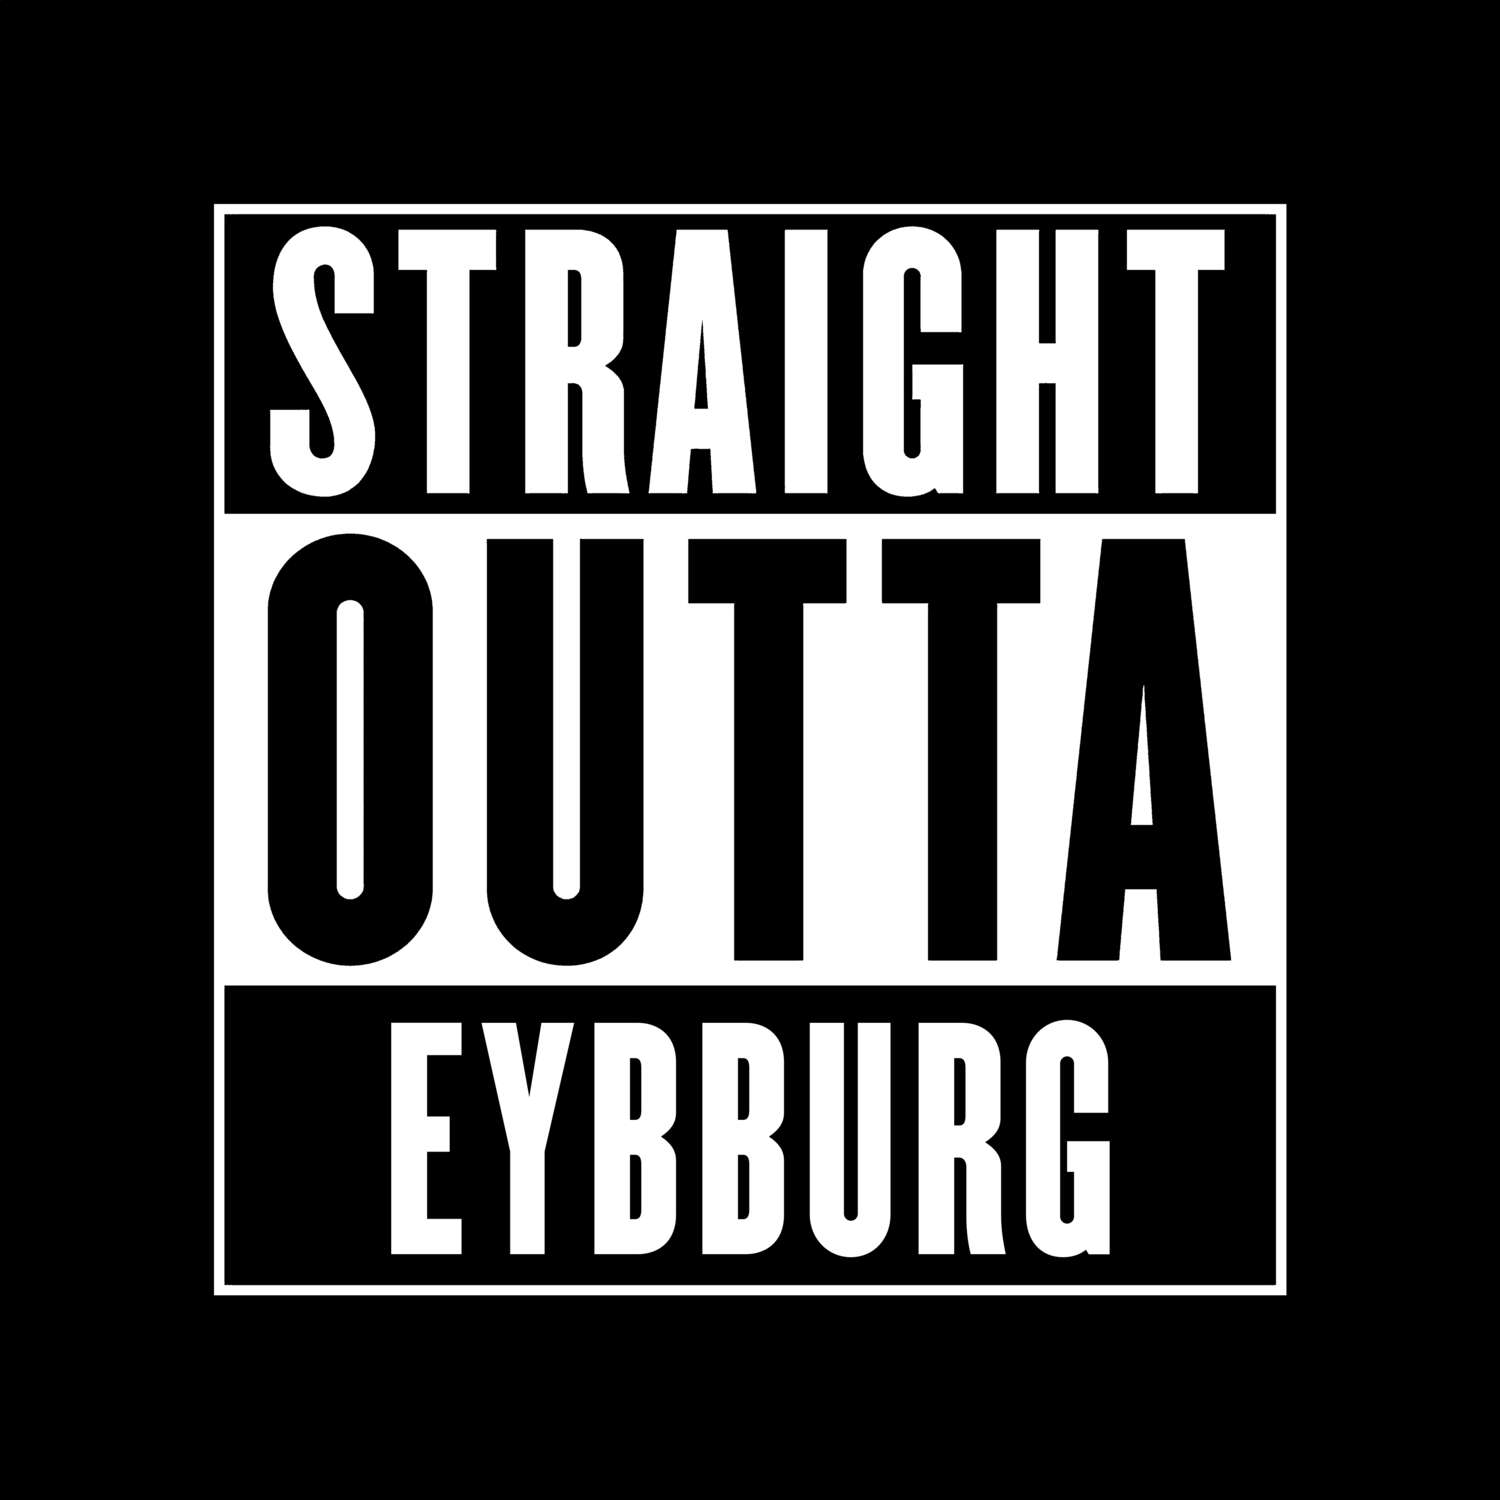 Eybburg T-Shirt »Straight Outta«